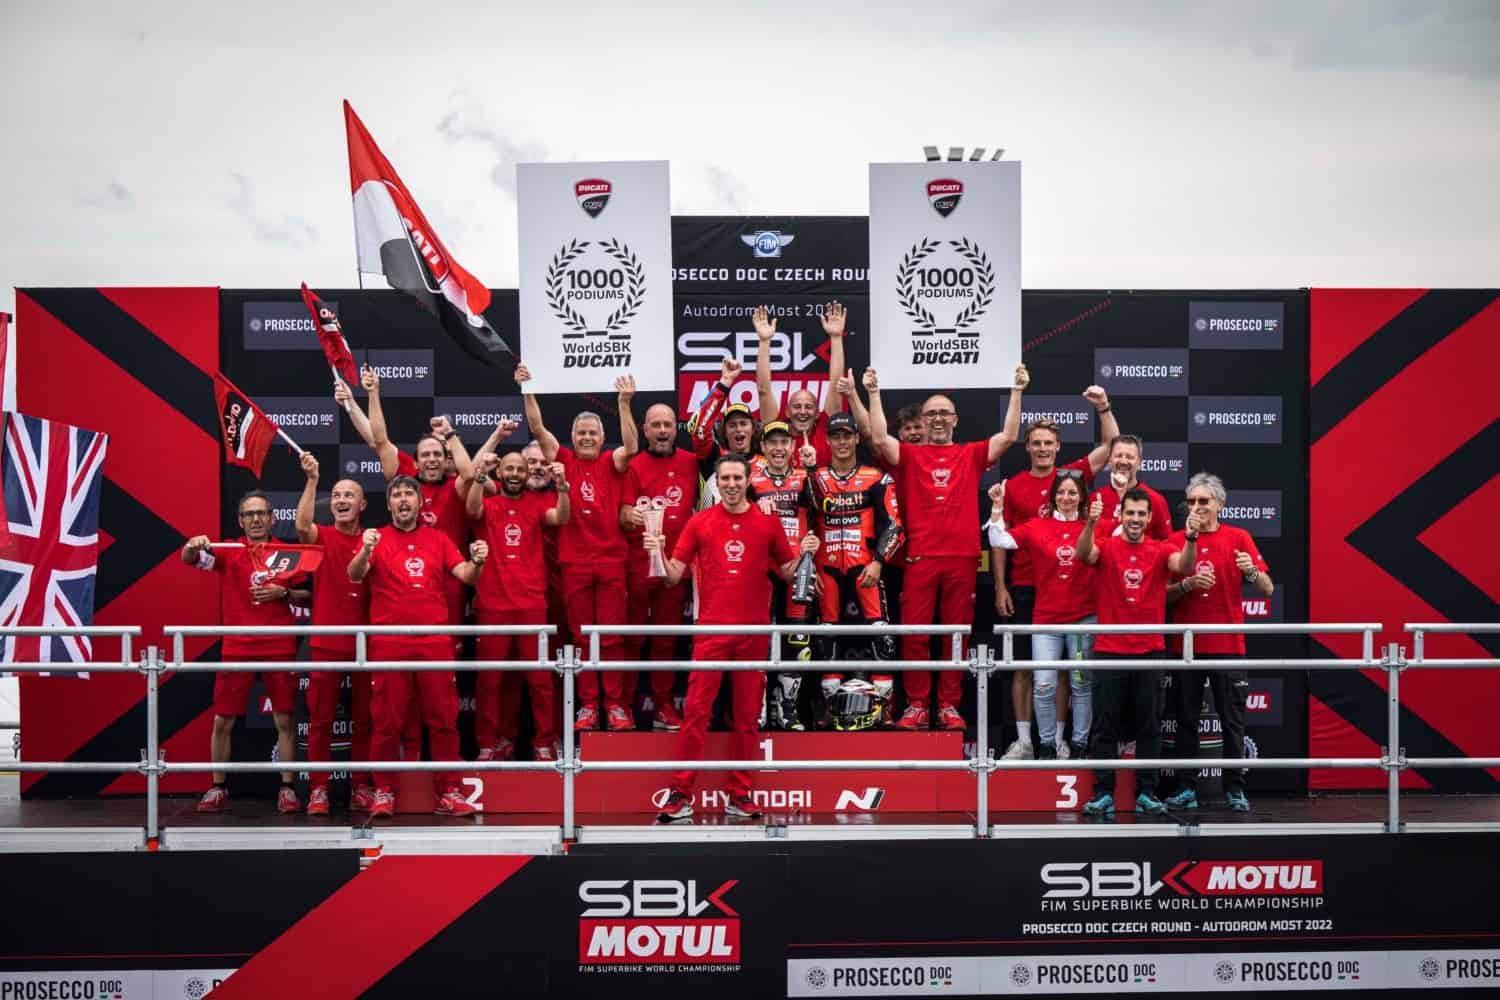 1000 podieplaceringer til Ducati i WSBK